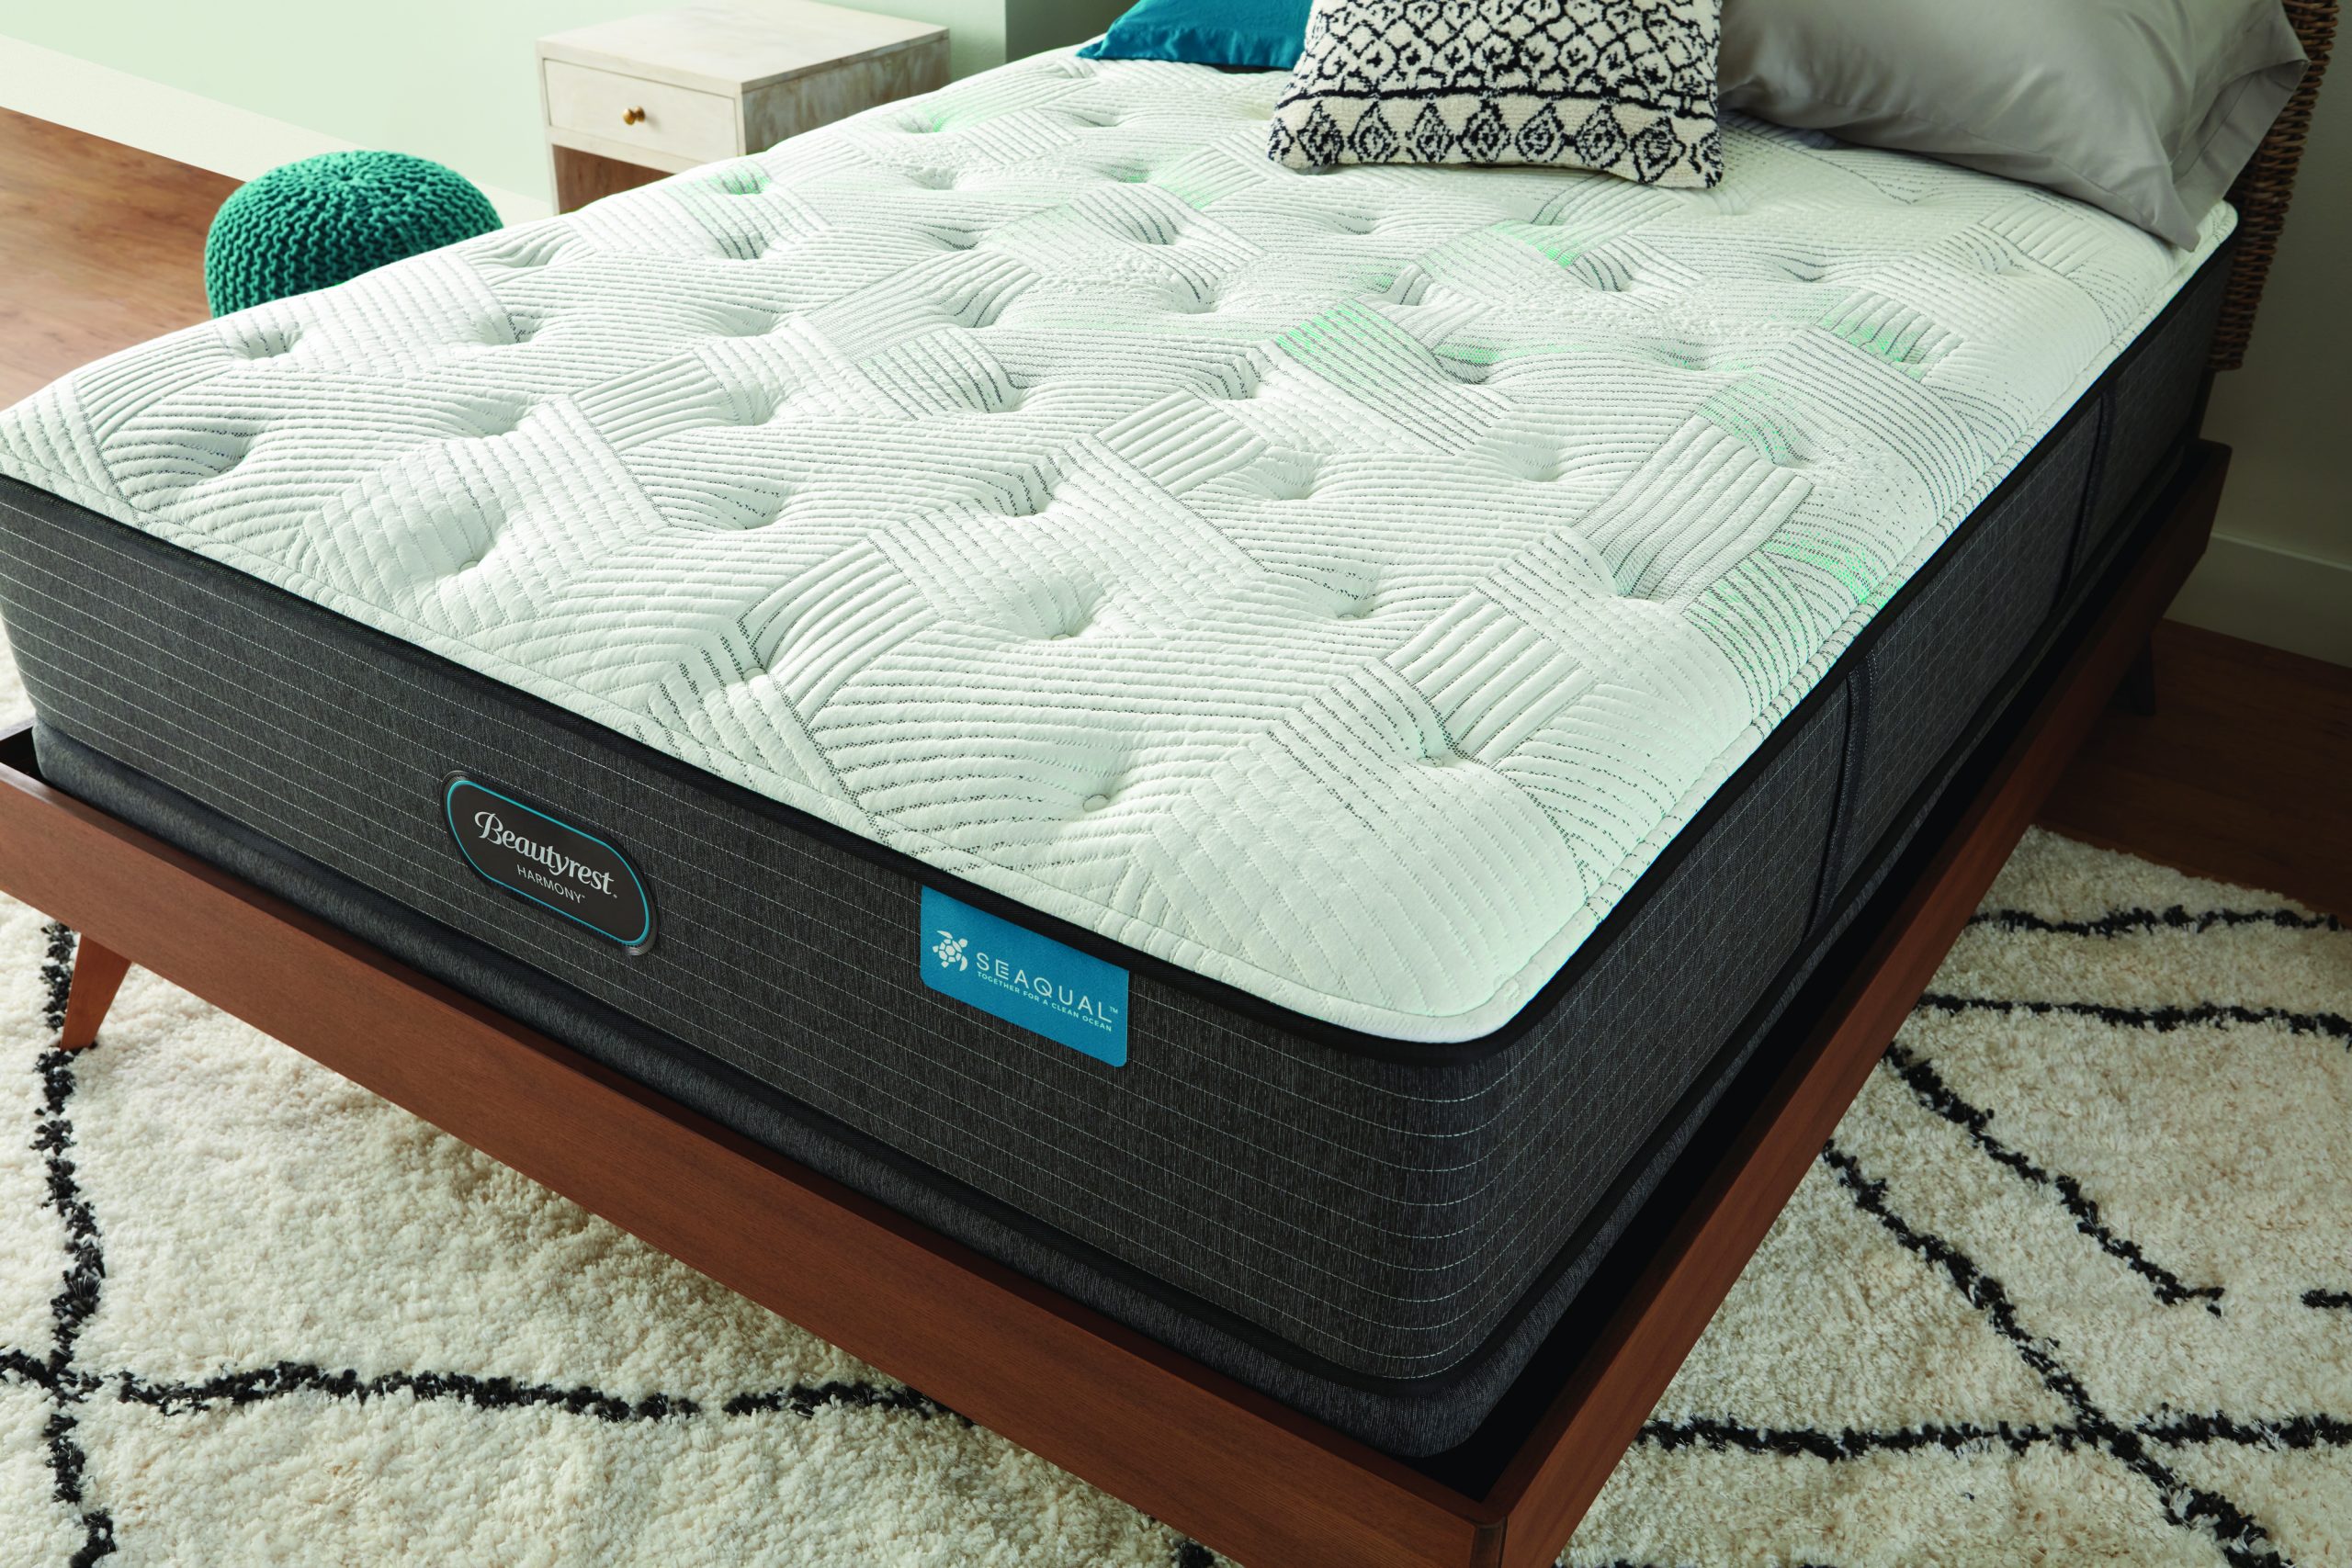 pressure smart plush mattress reviews